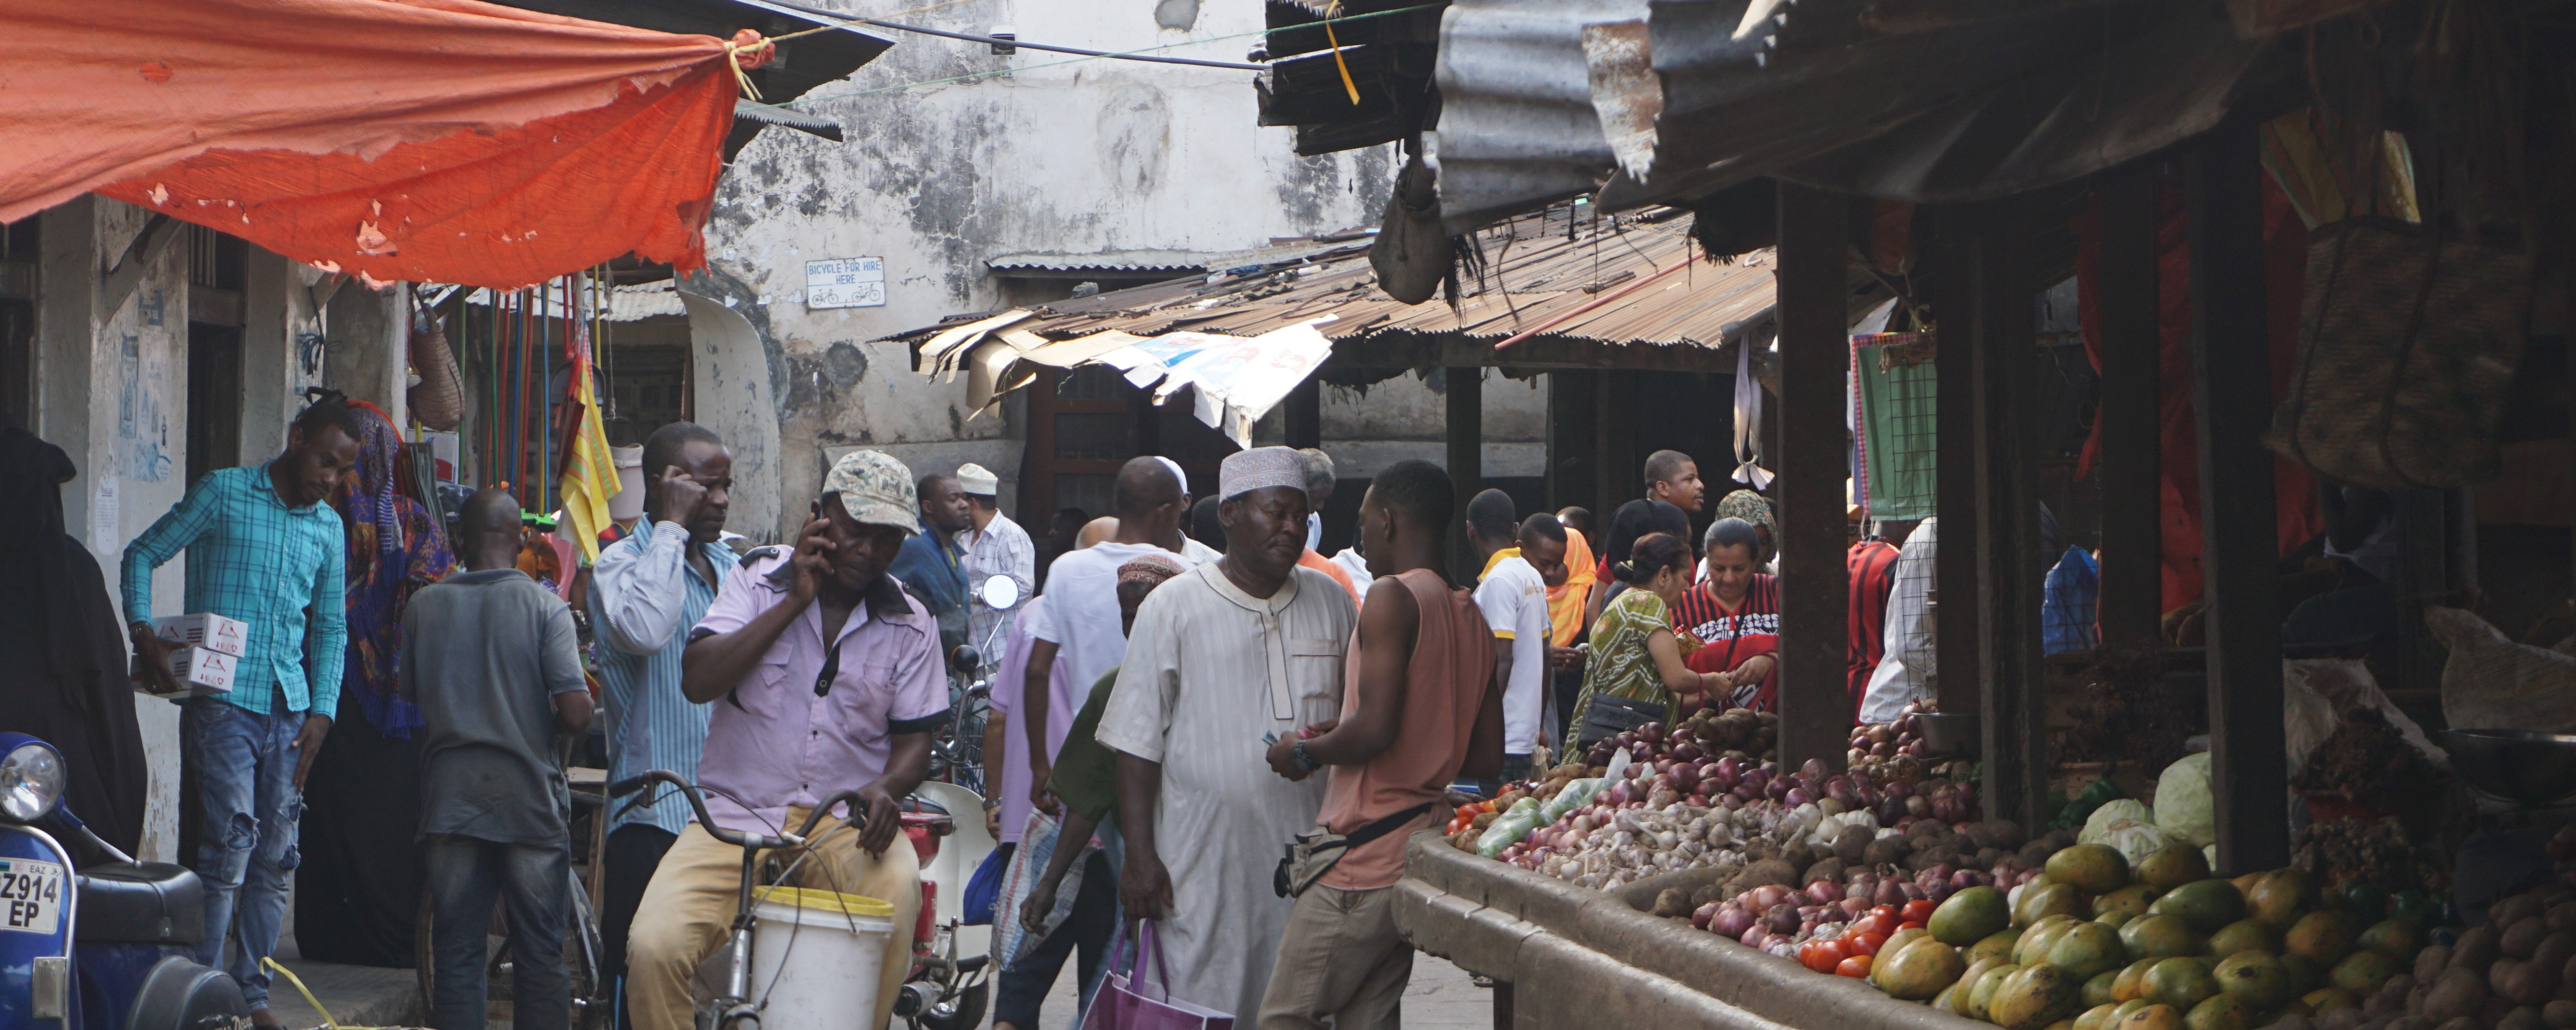 01_Markt_Bagamoyo